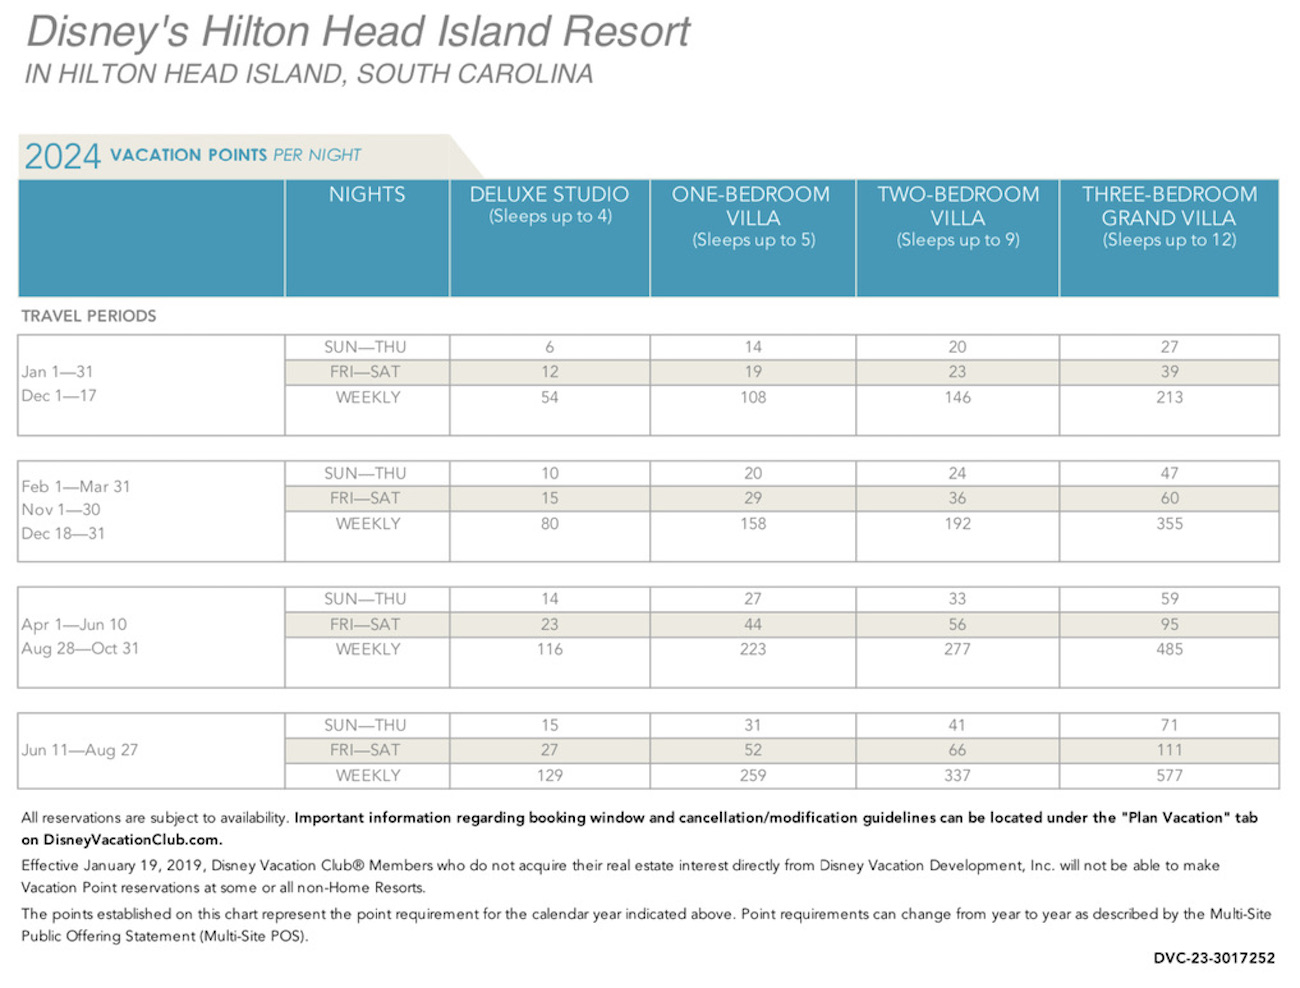 Hilton Head Island 2024